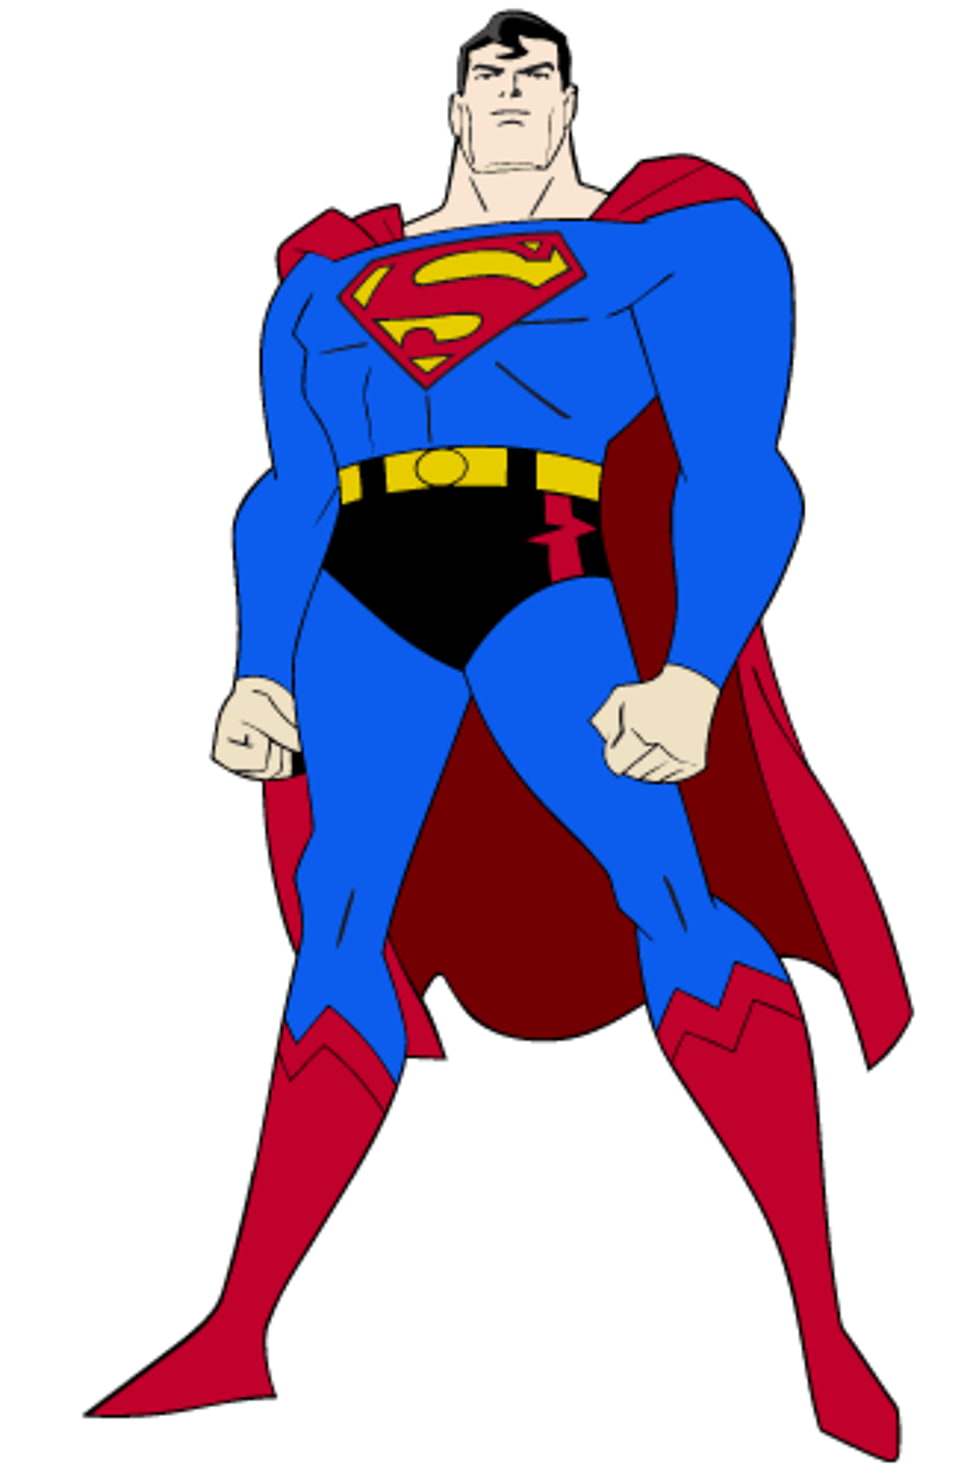 Superman illustration showing torso HD wallpaper